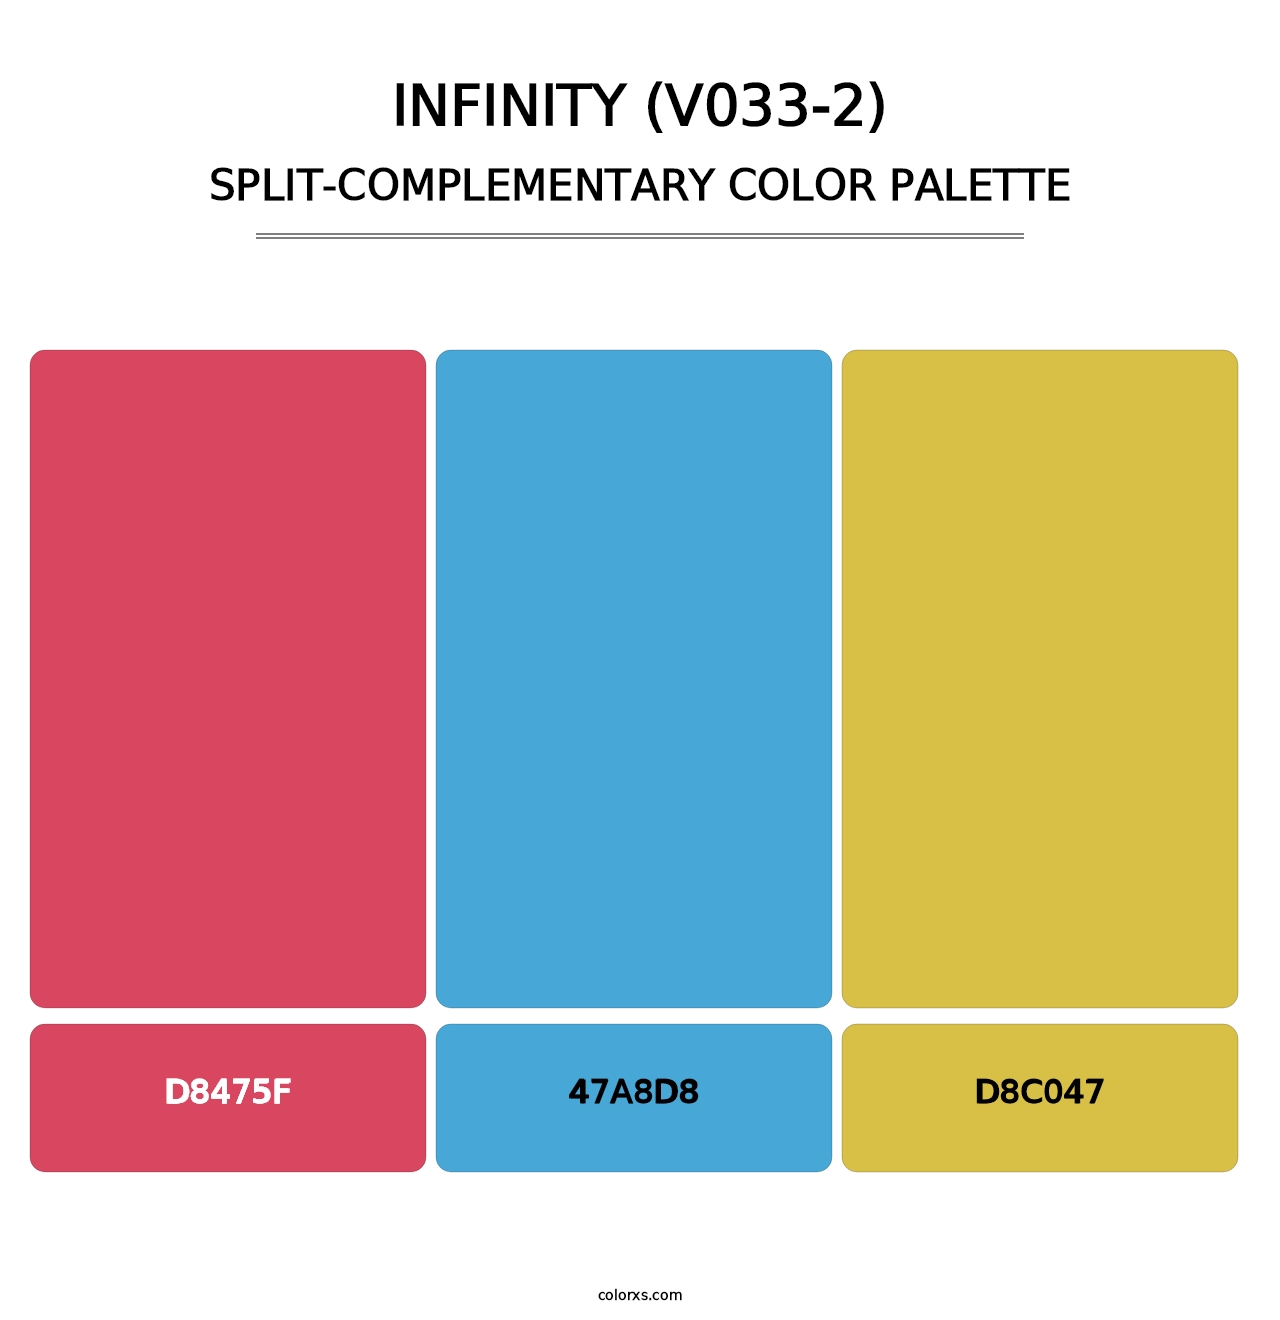 Infinity (V033-2) - Split-Complementary Color Palette